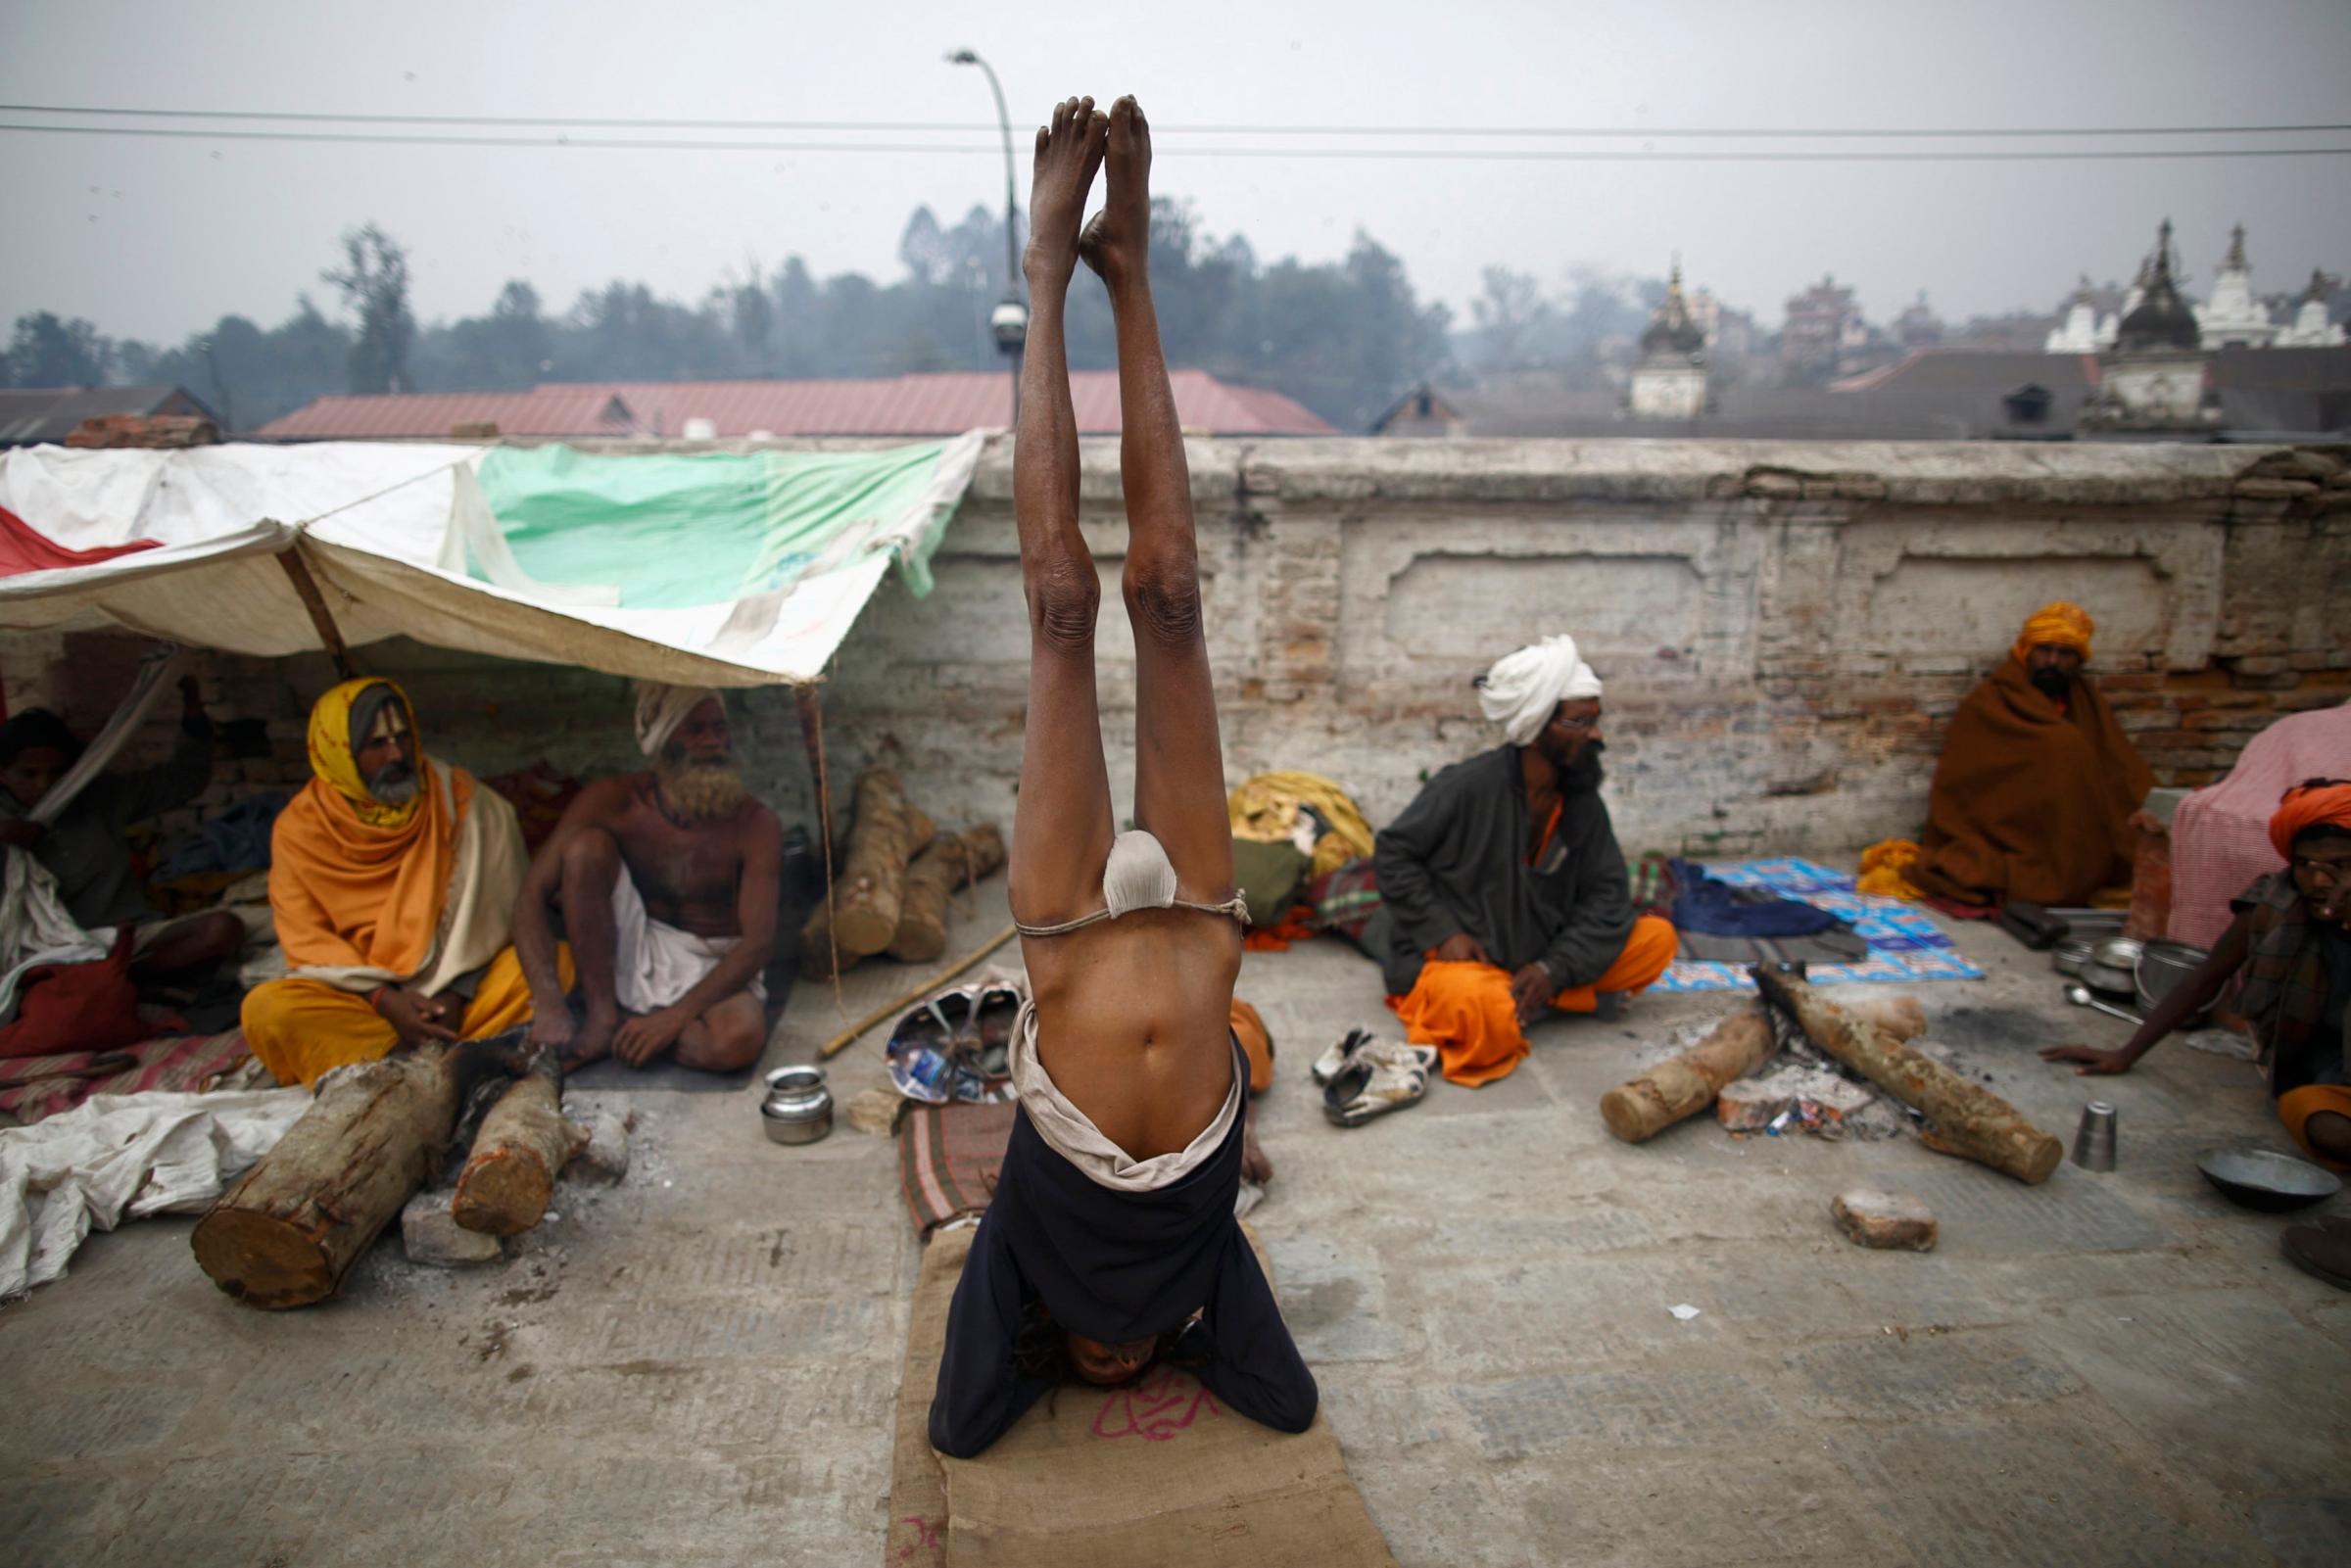 A Hindu holy man, or sadhu, performs yoga at the premises of Pashupatinath Temple in Kathmandu